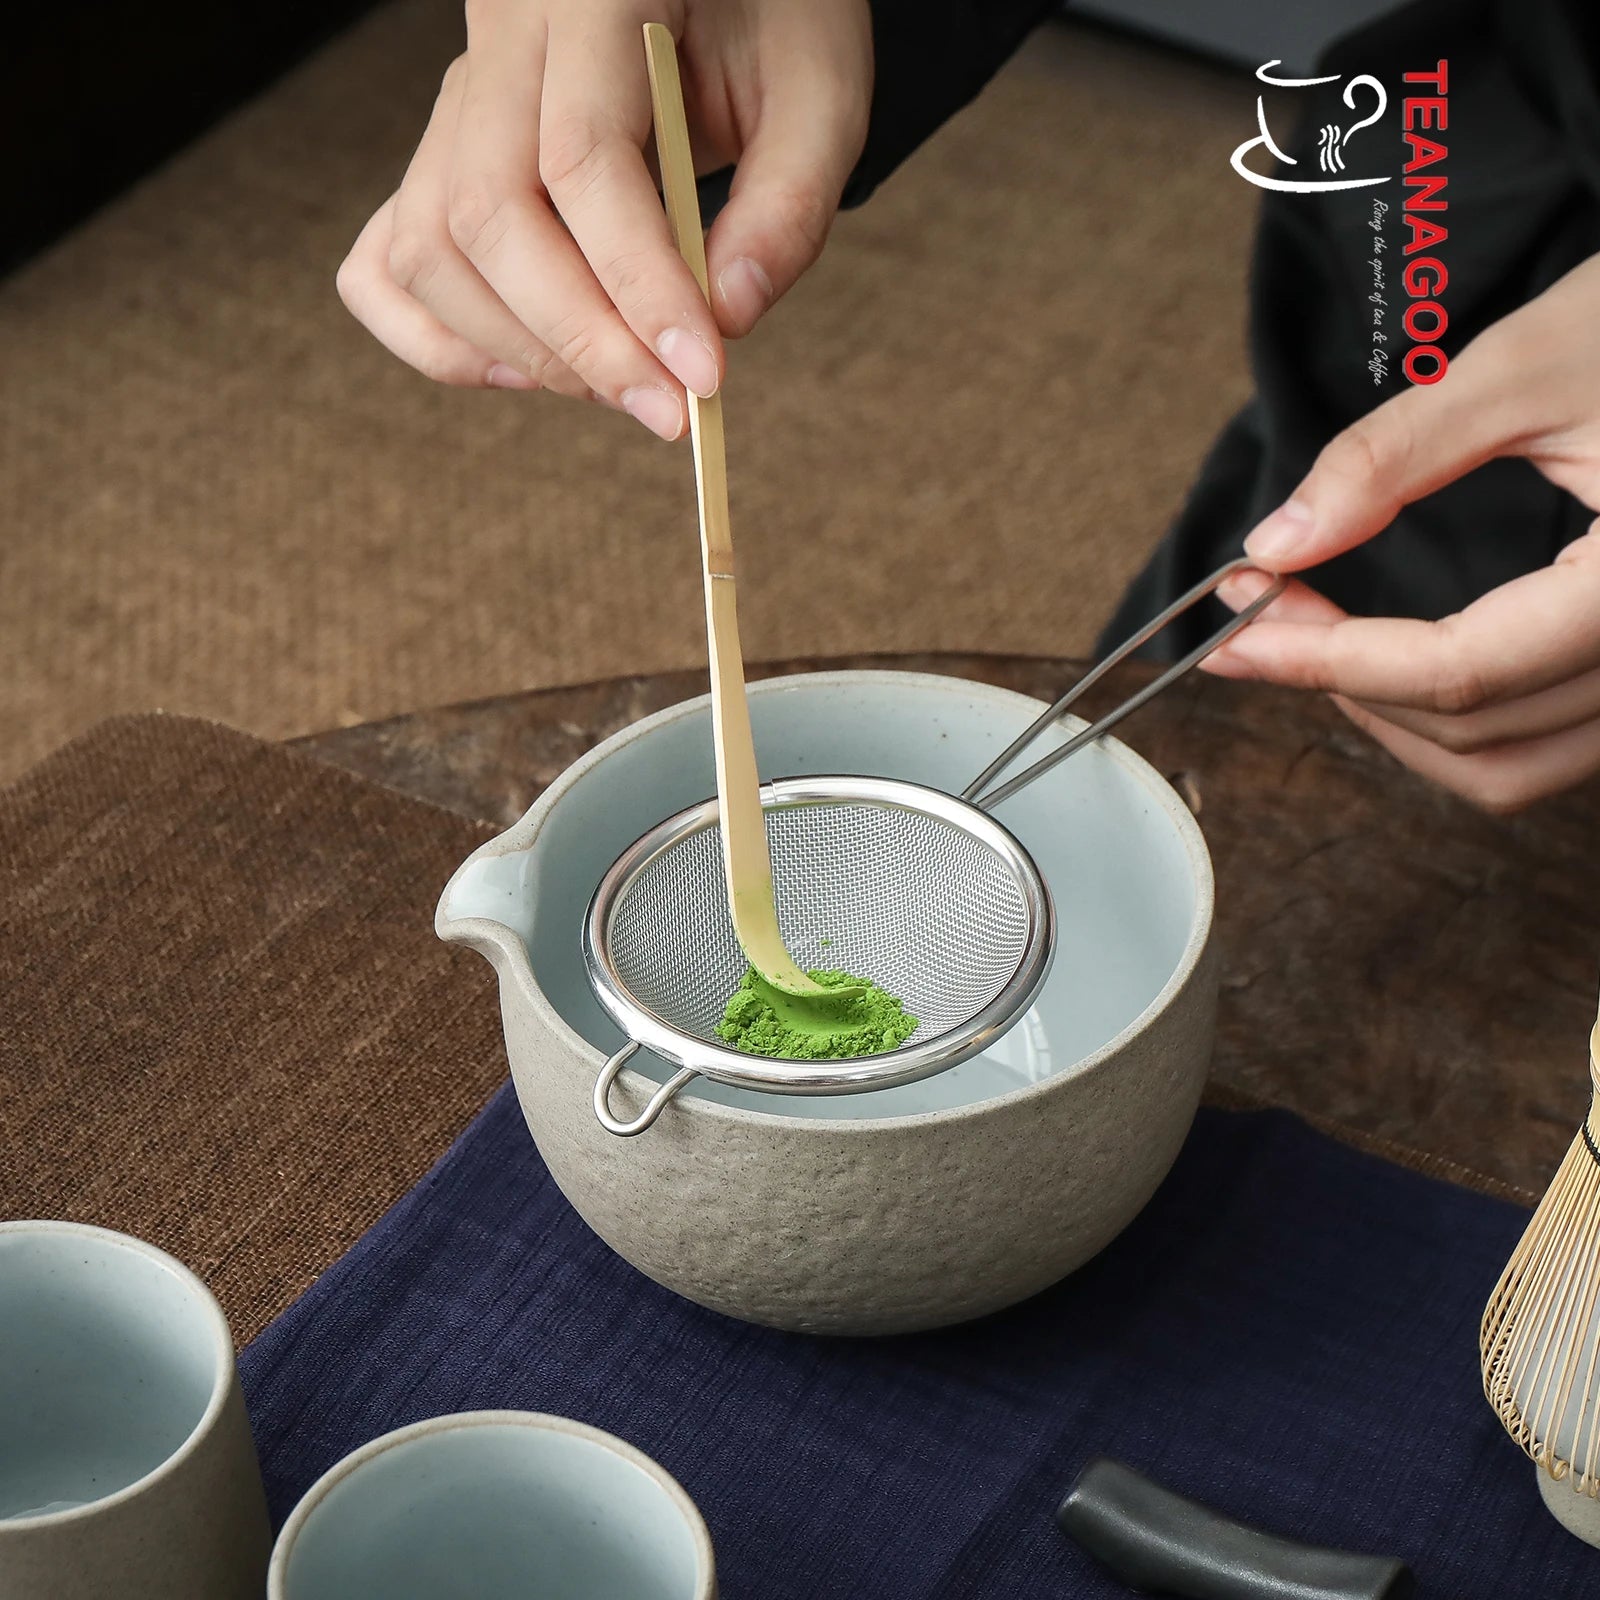 Japanese Tea Set Matcha Kit, Bamboo Kitchen Accessories